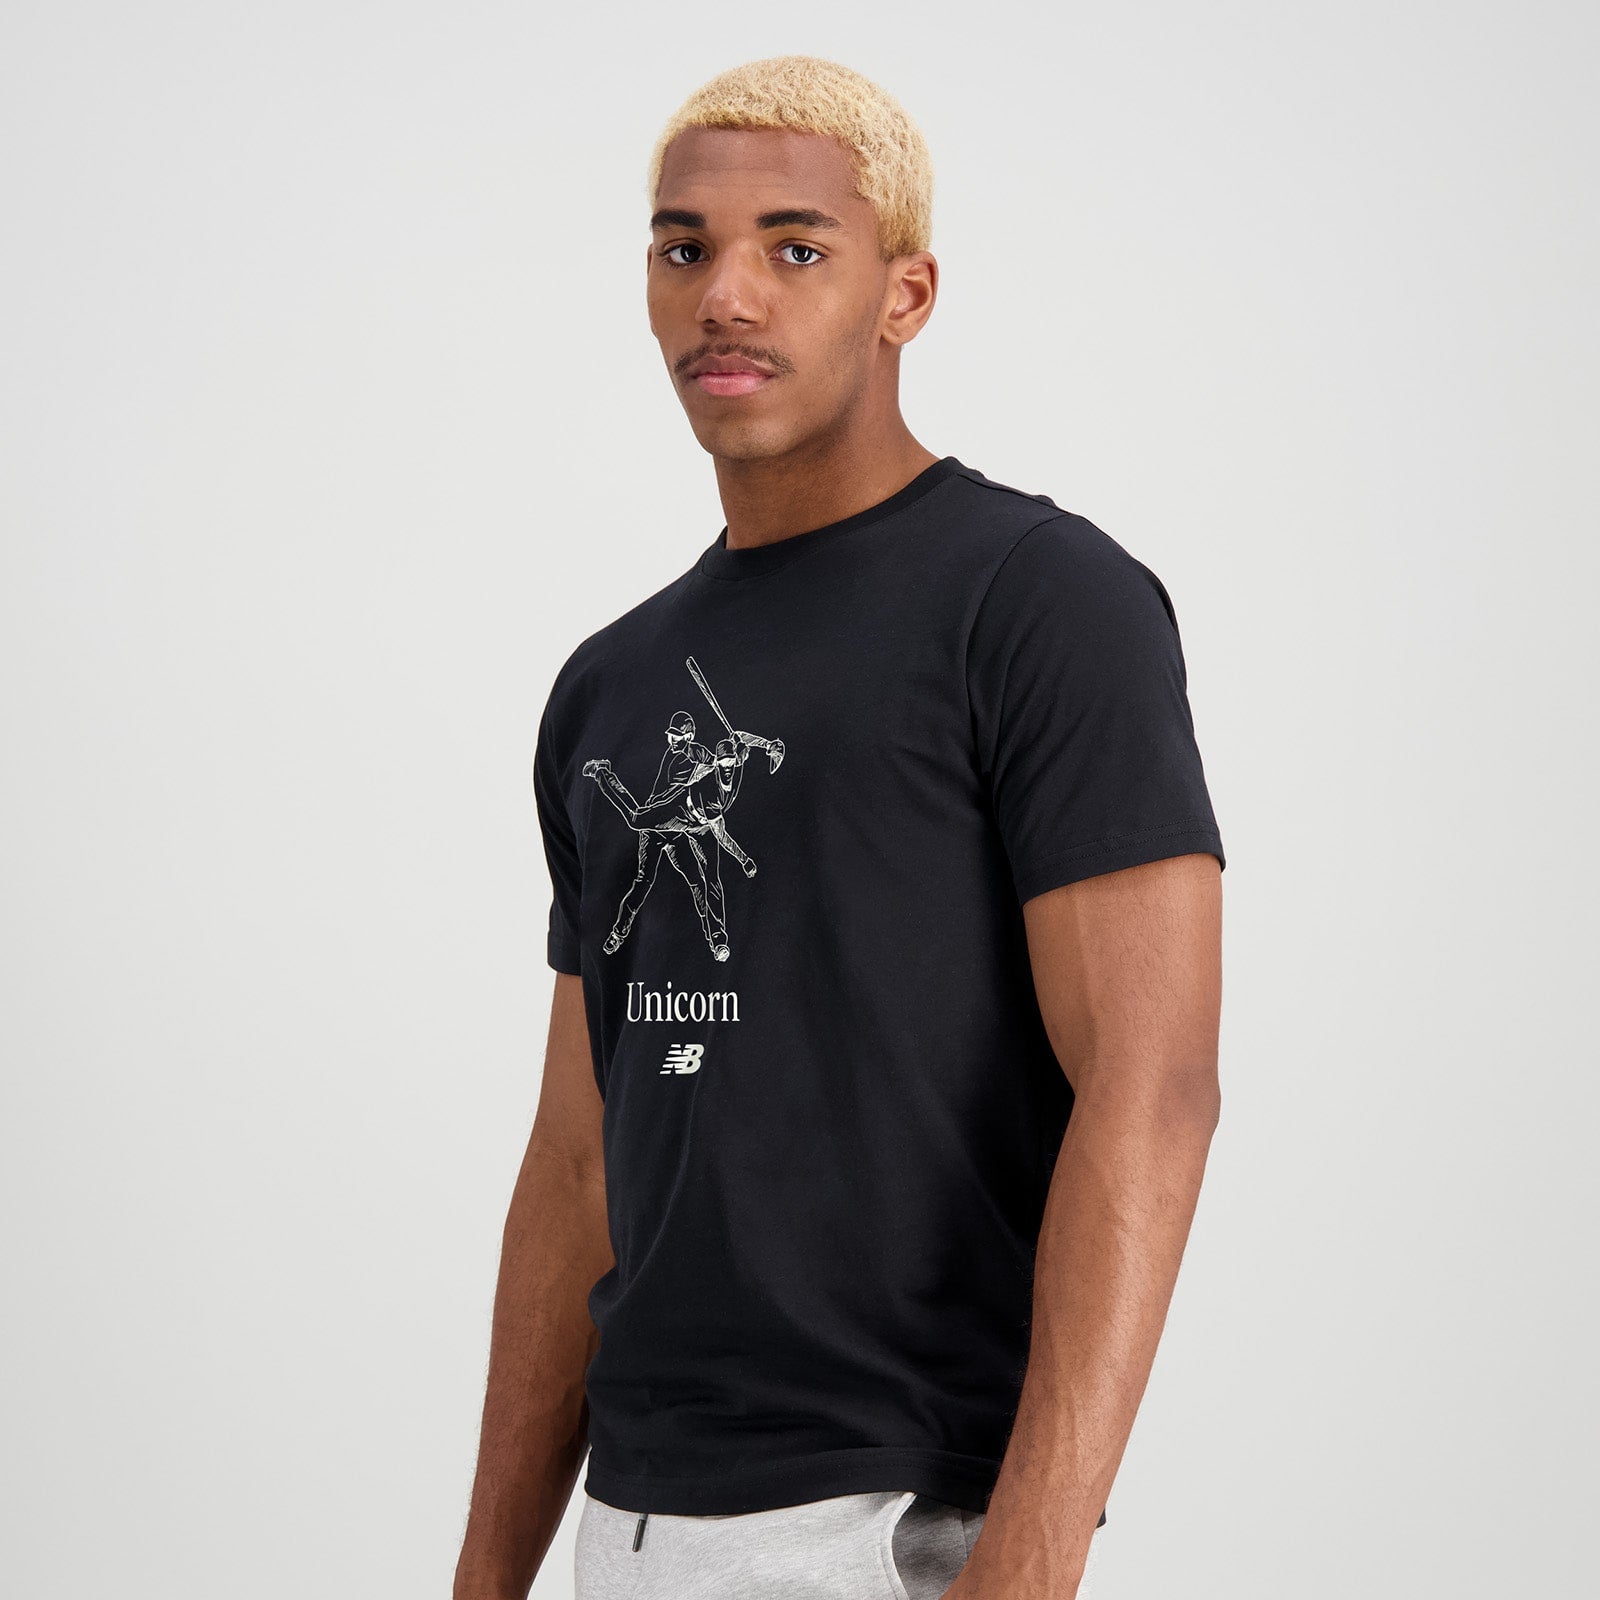 The Unicorn graphic short sleeve t-shirt